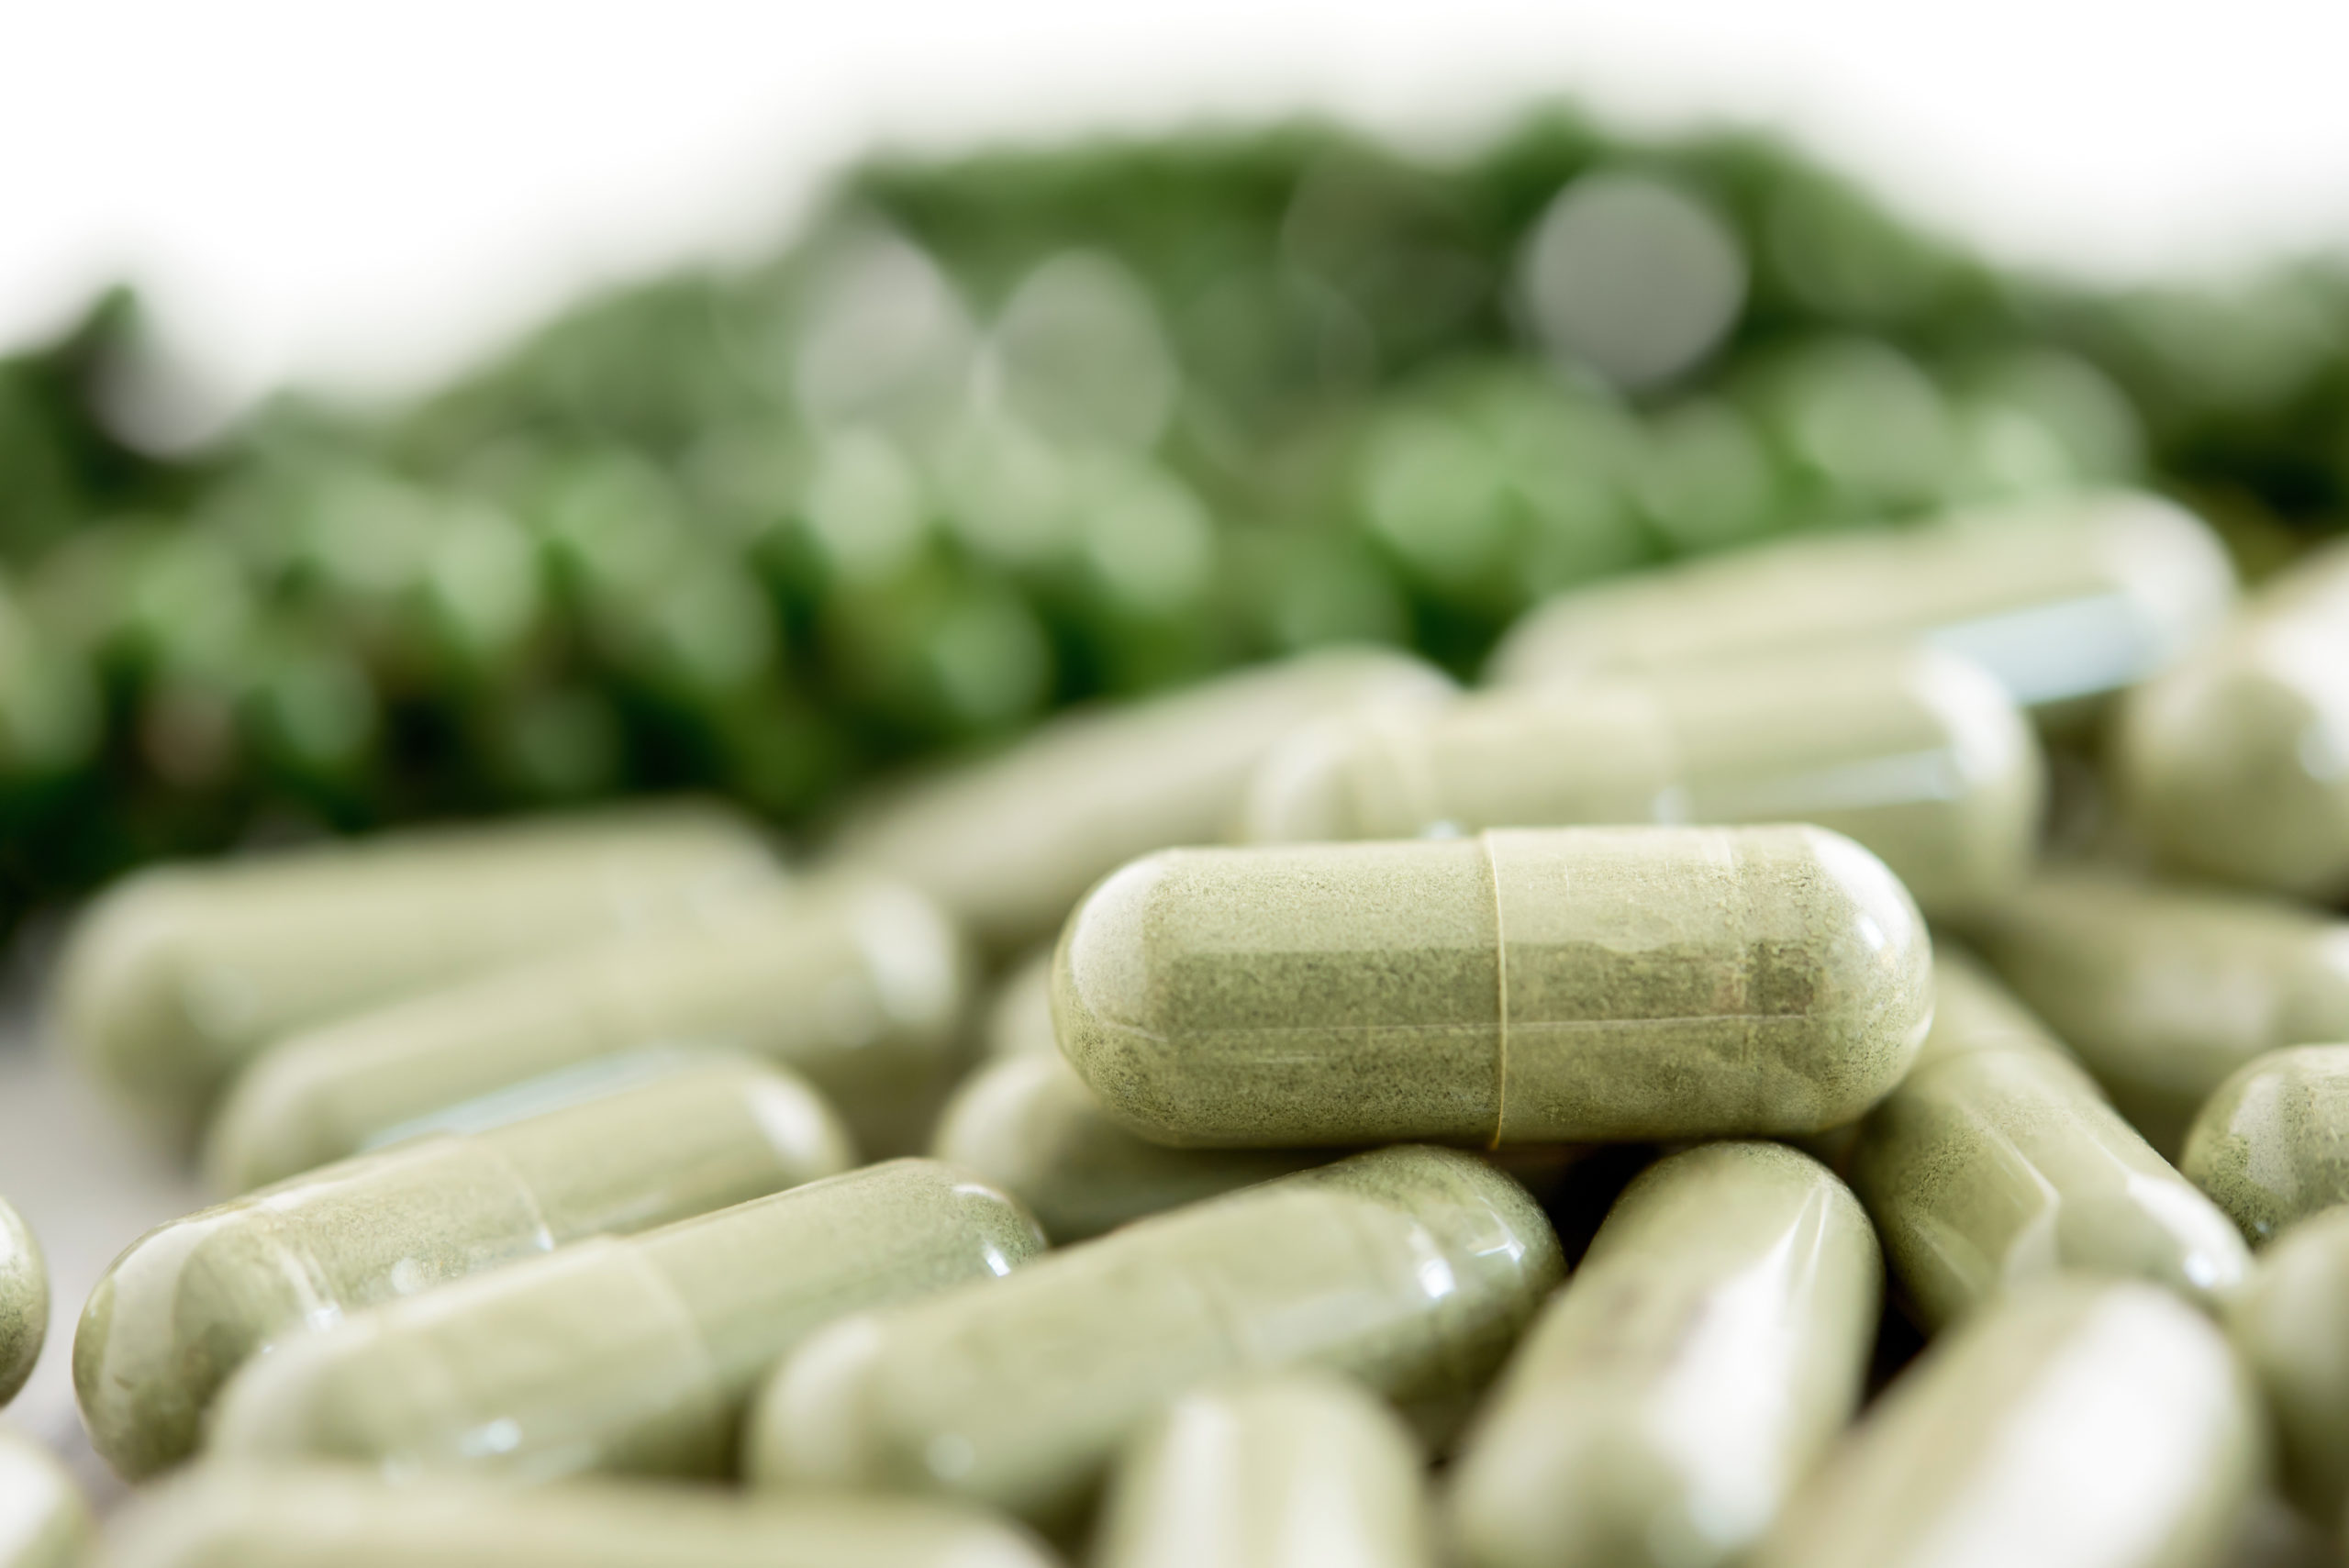 Green alternative medicine herbal extract capsules